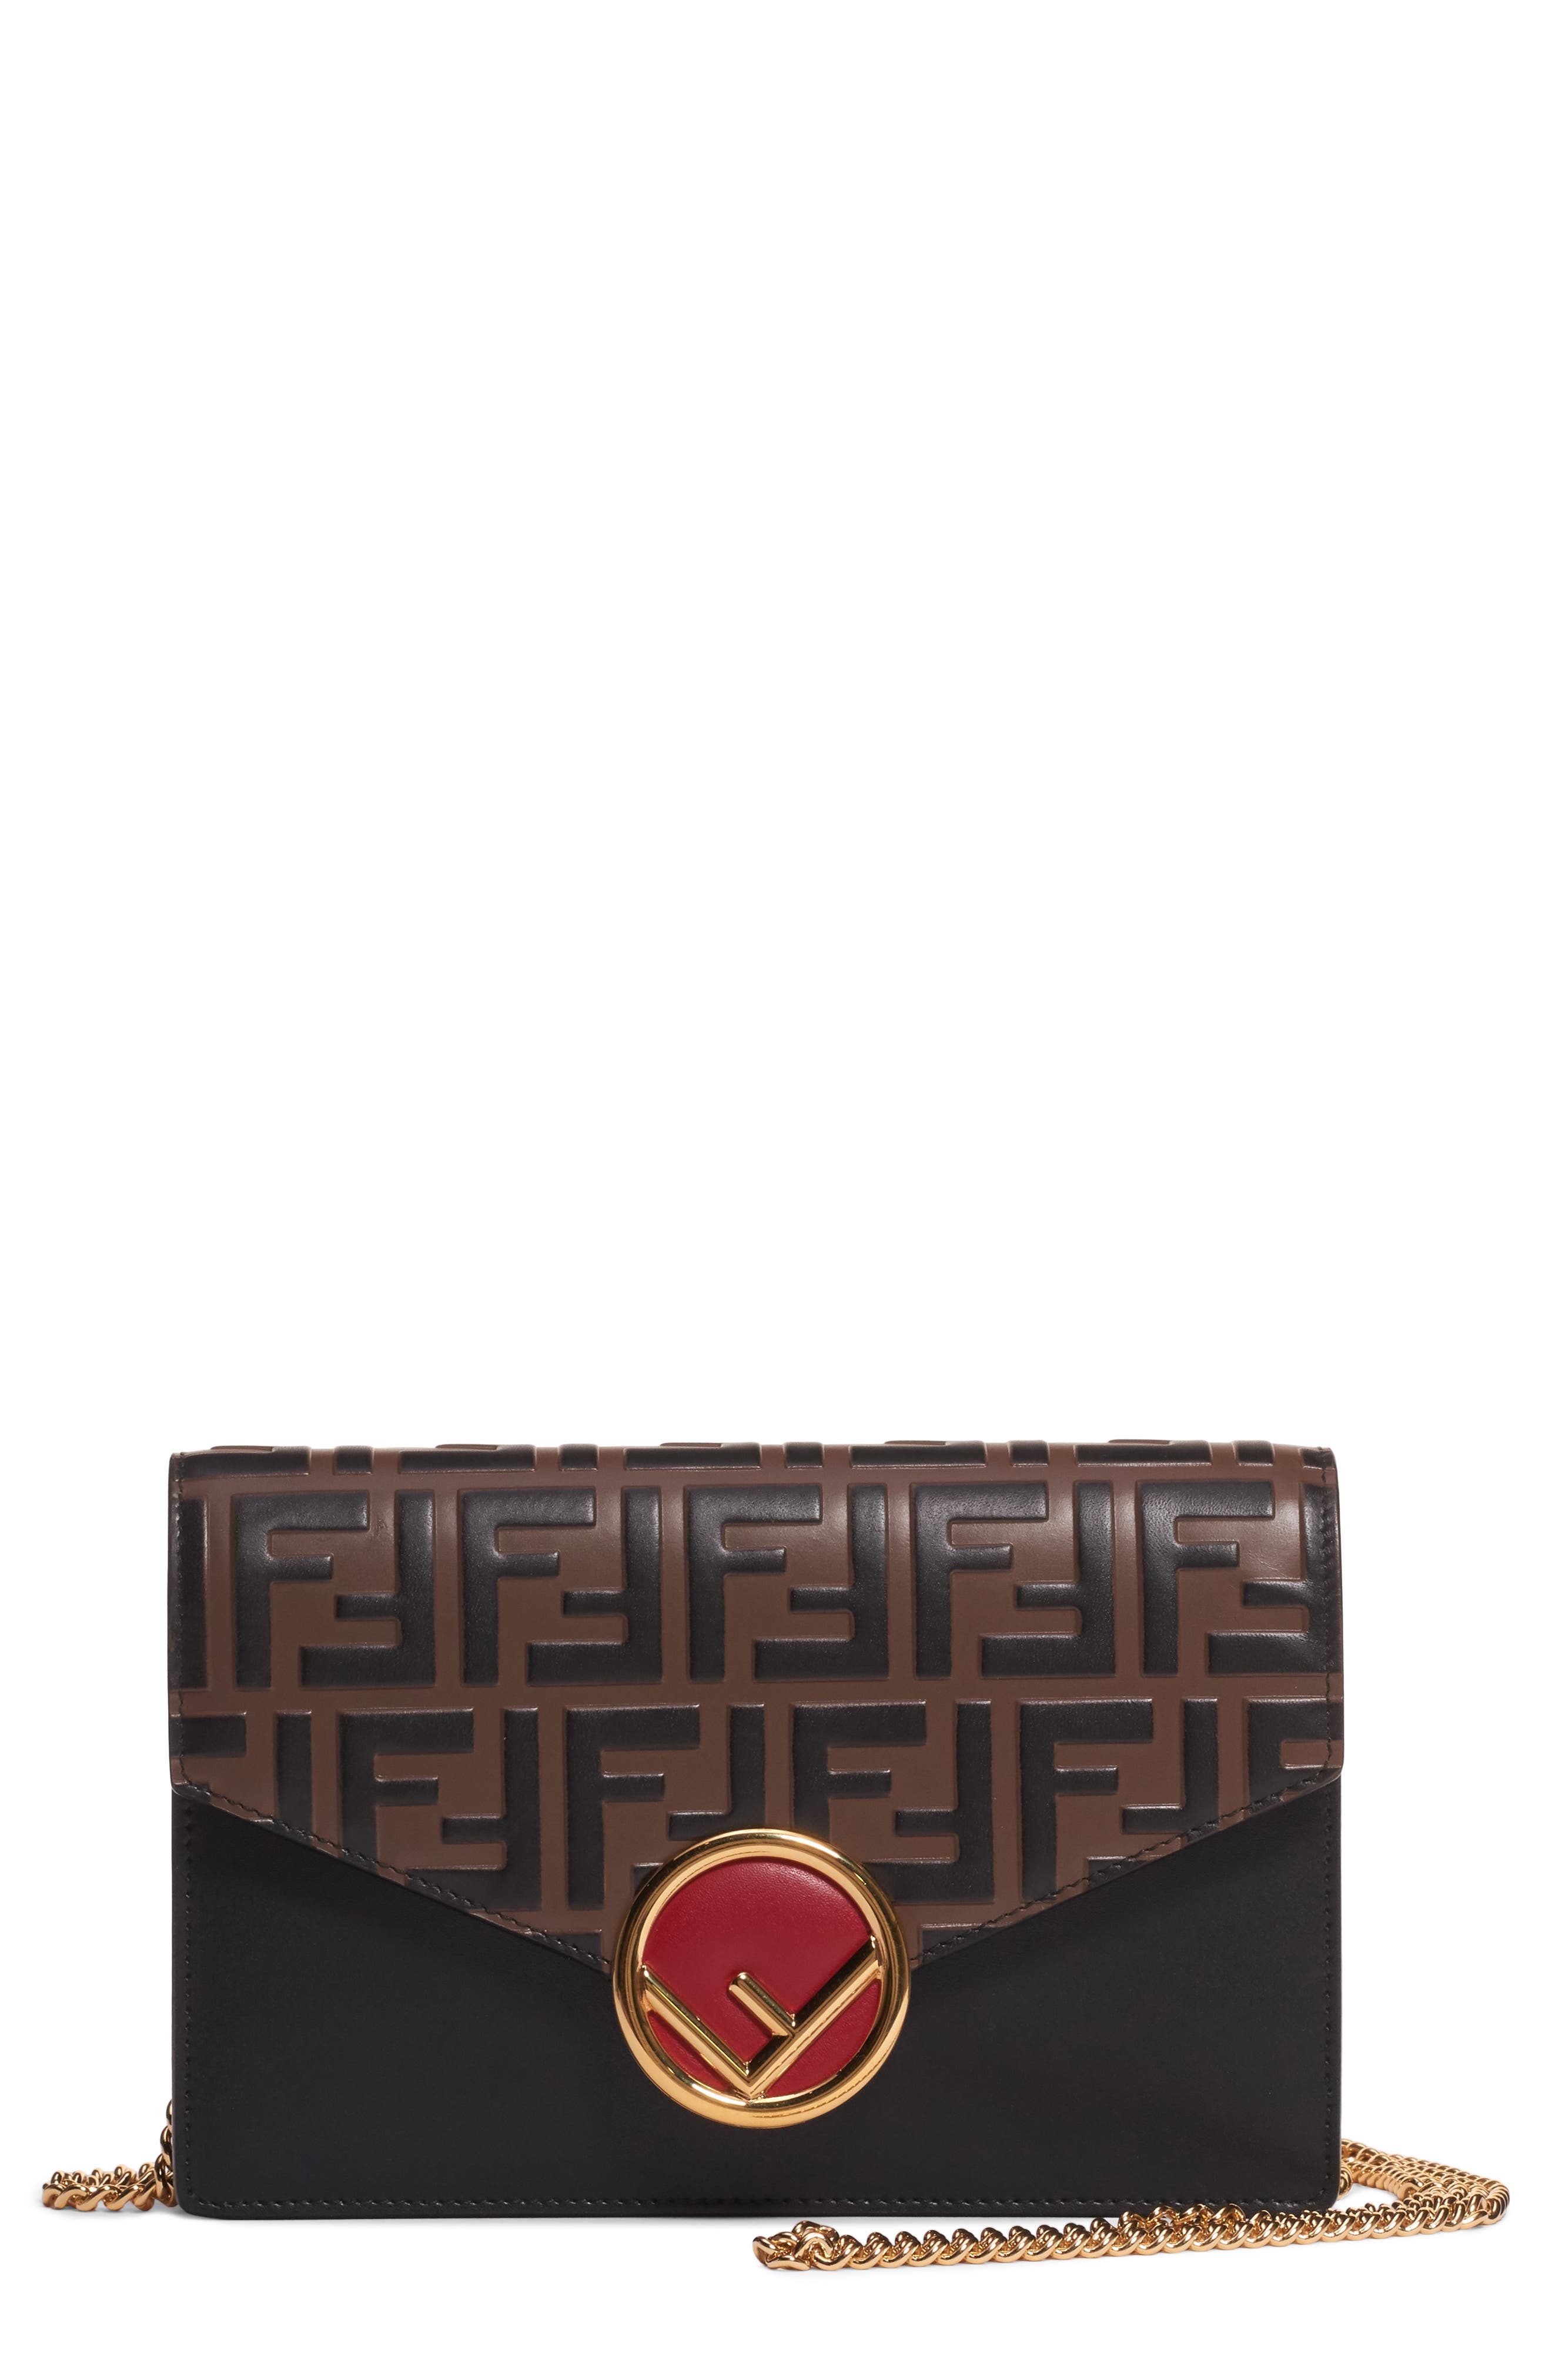 Fendi Logo Calfskin Leather Wallet on a Chain in Maya/Nero